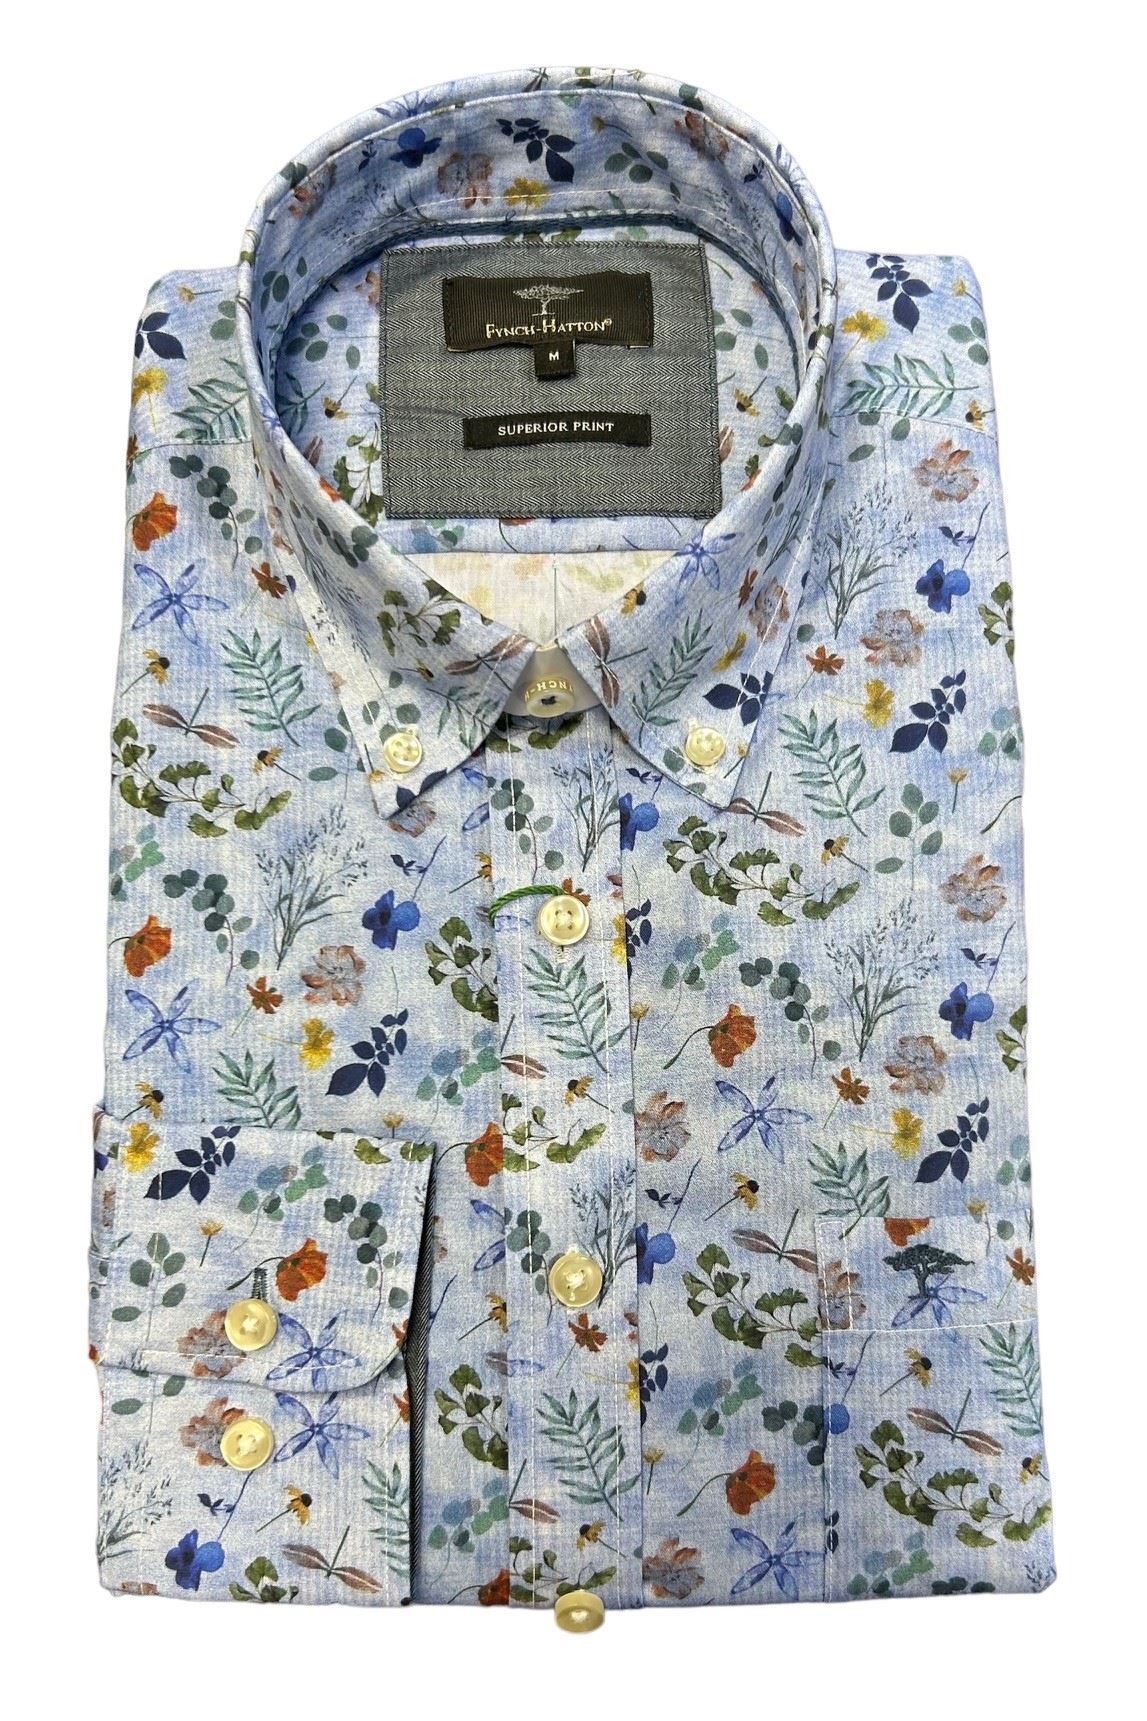 S&T Moore. Fynch Hatton Long Sleeve Shirt 1309-5003